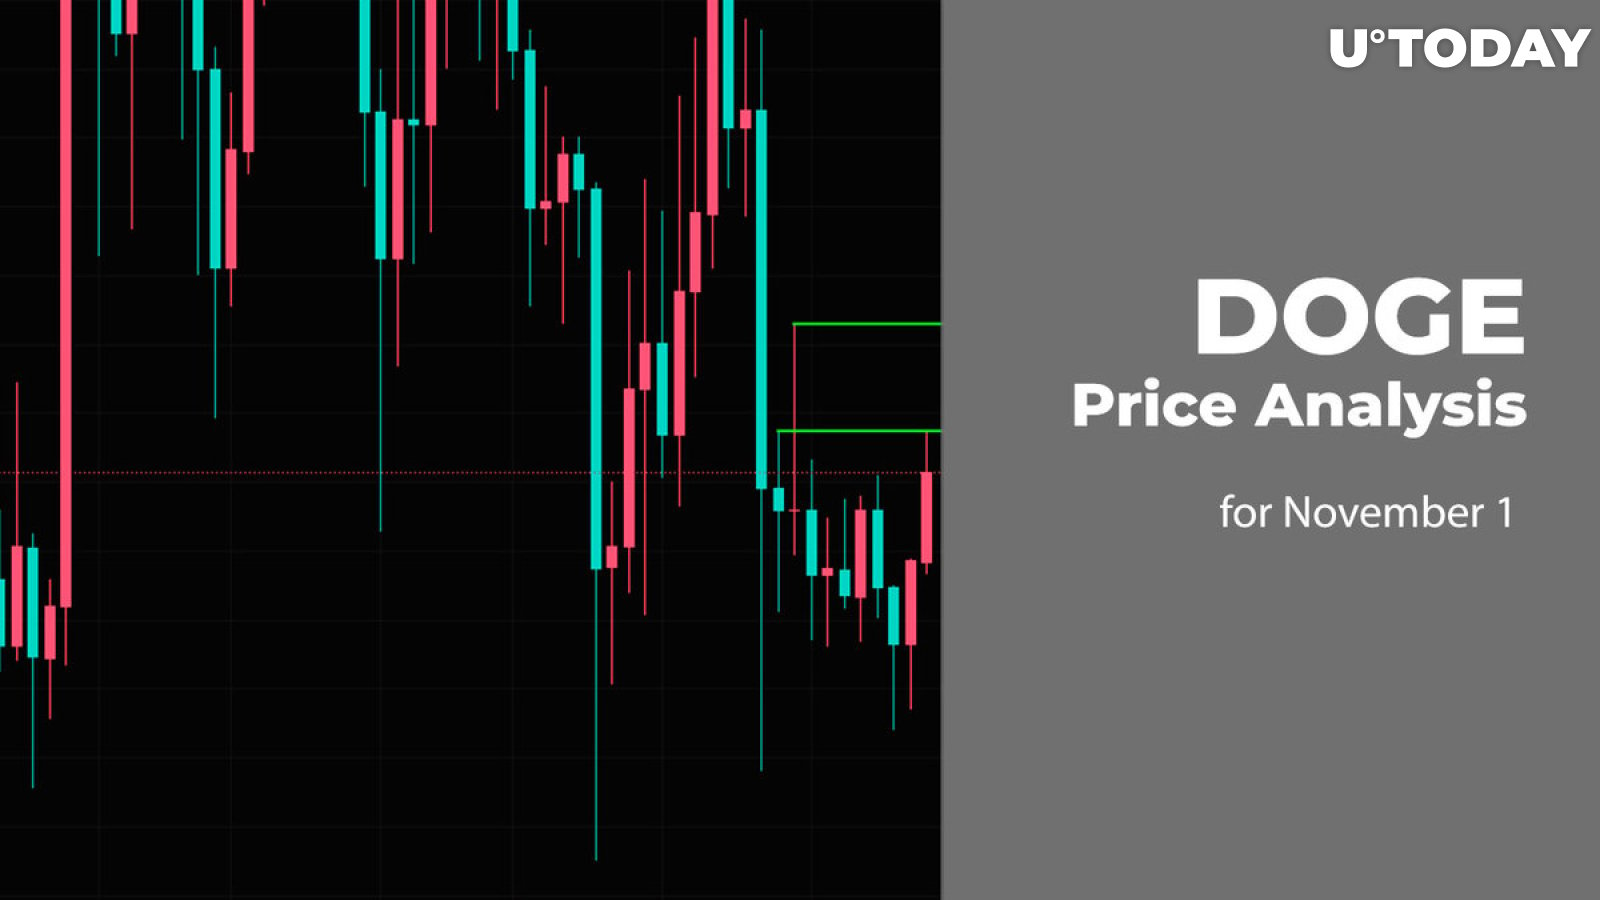 DOGE Price Analysis for November 1